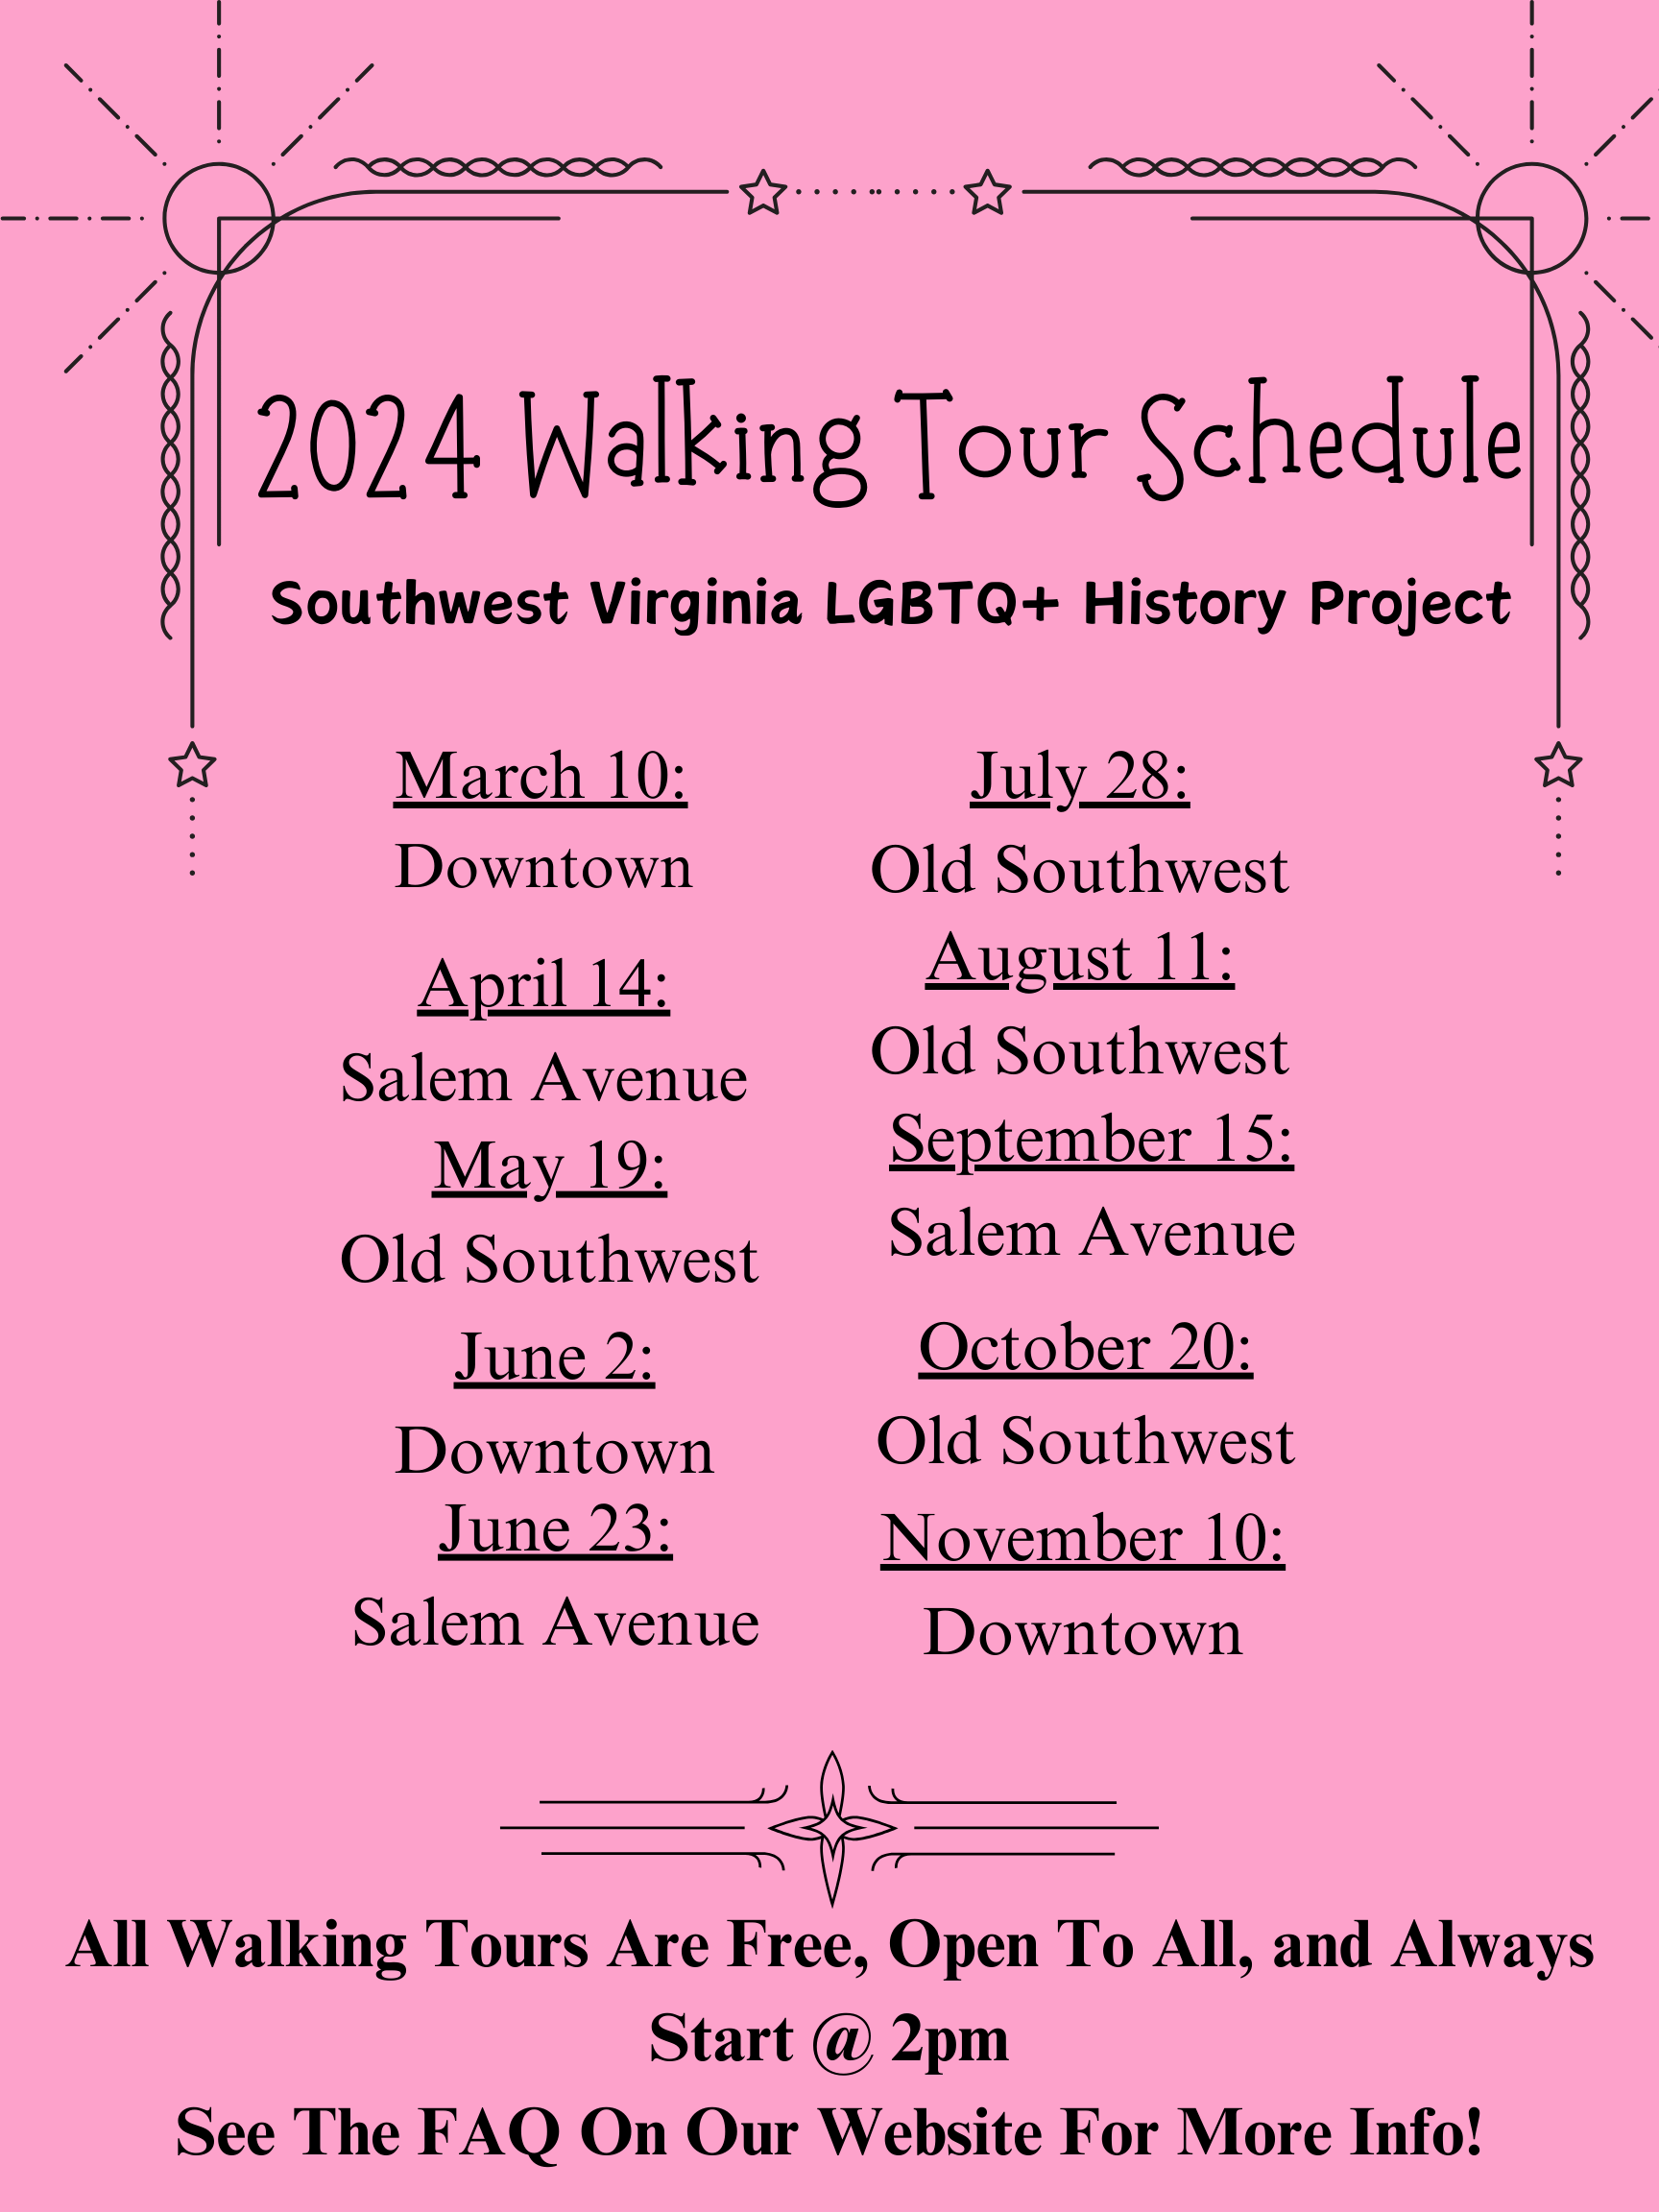 Southwest Virginia LGBTQ+ History Project